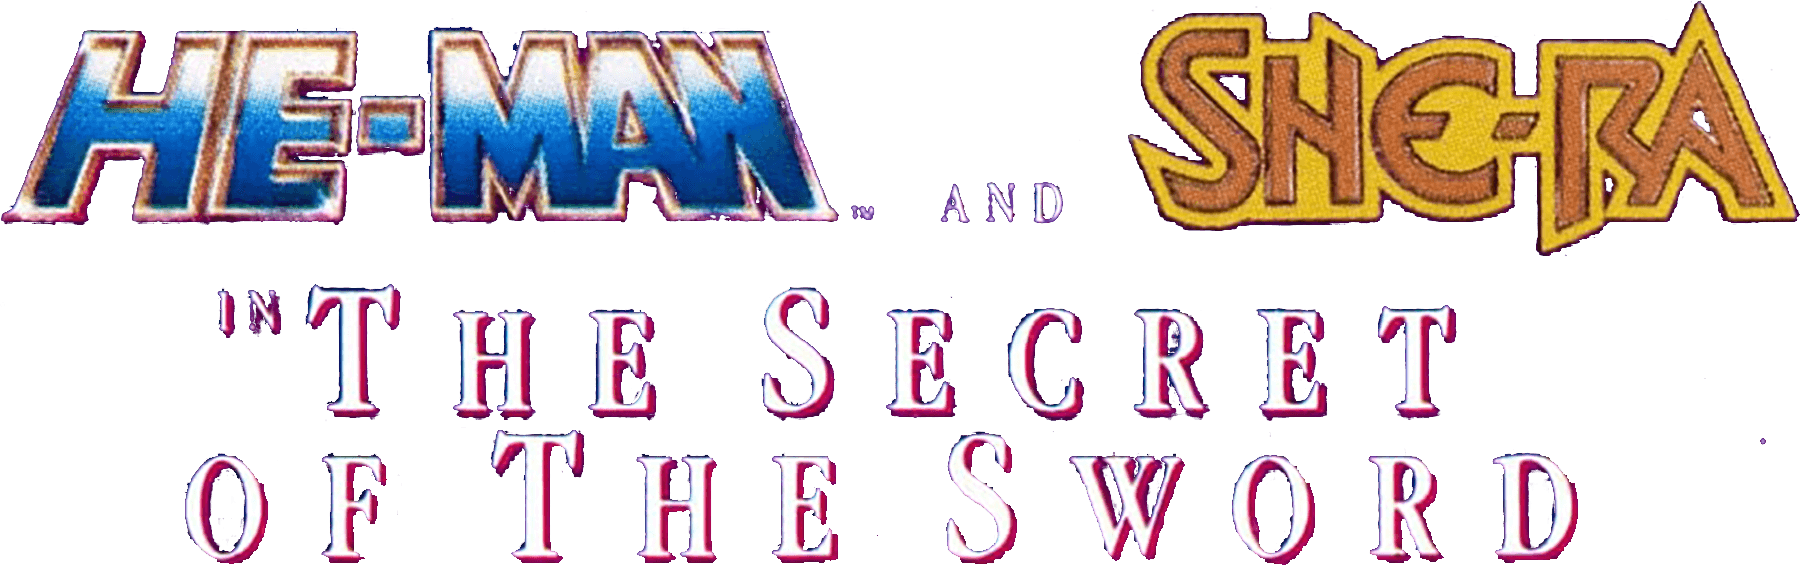 He-Man and She-Ra: The Secret of the Sword logo